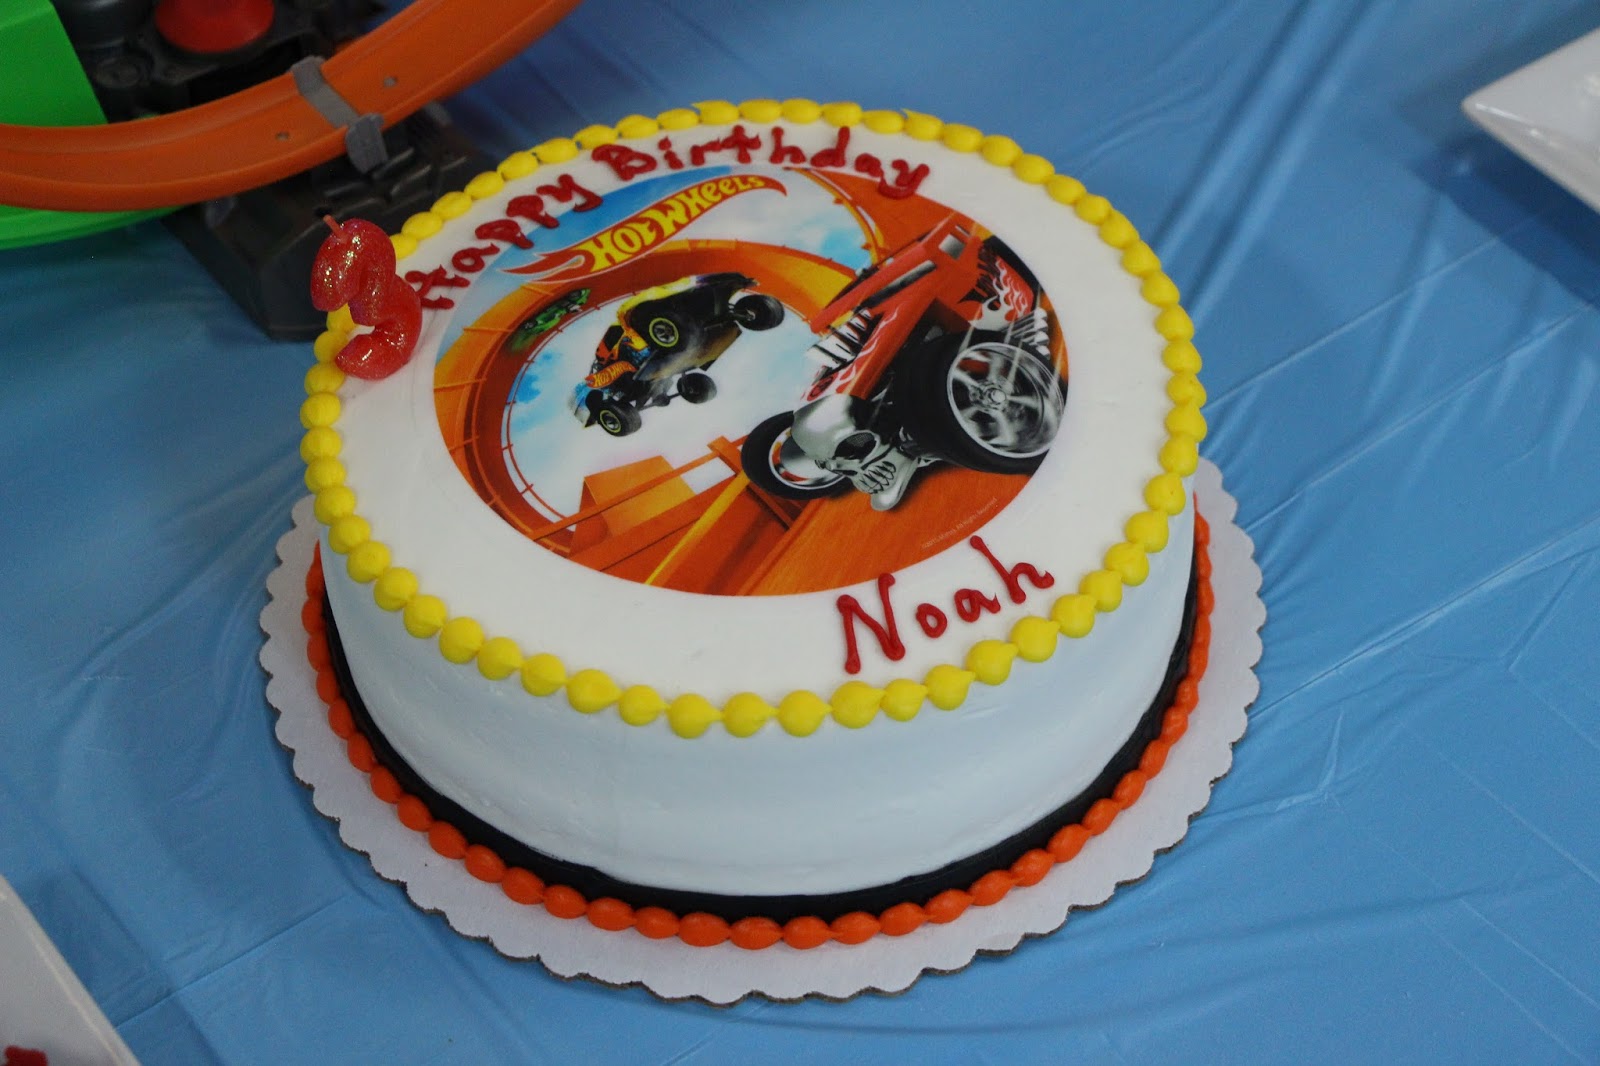 Hotwheels Cake for celebrate Noah's Birthday. #hotwheels